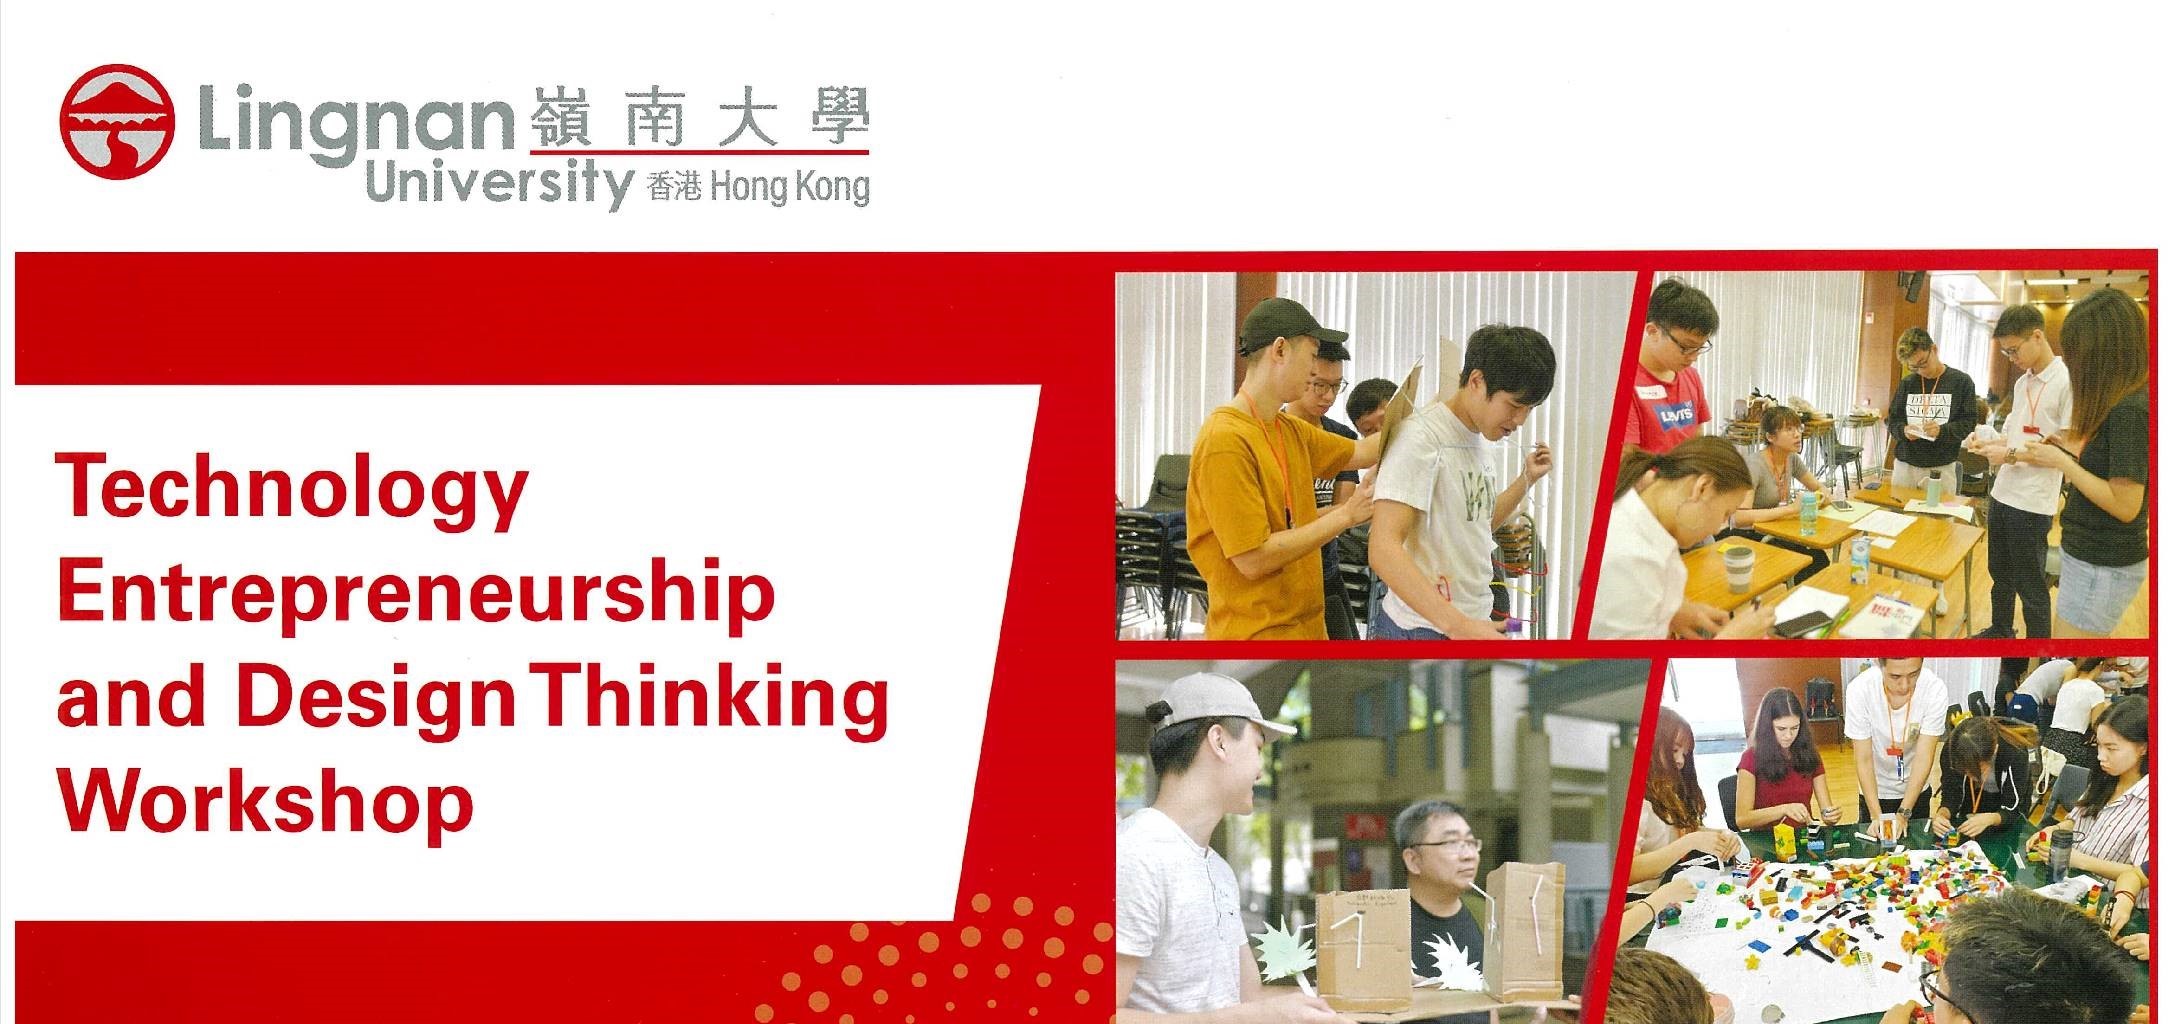 Technology Entrepreneurship and Design Thinking Workshop (by Lingnan University)